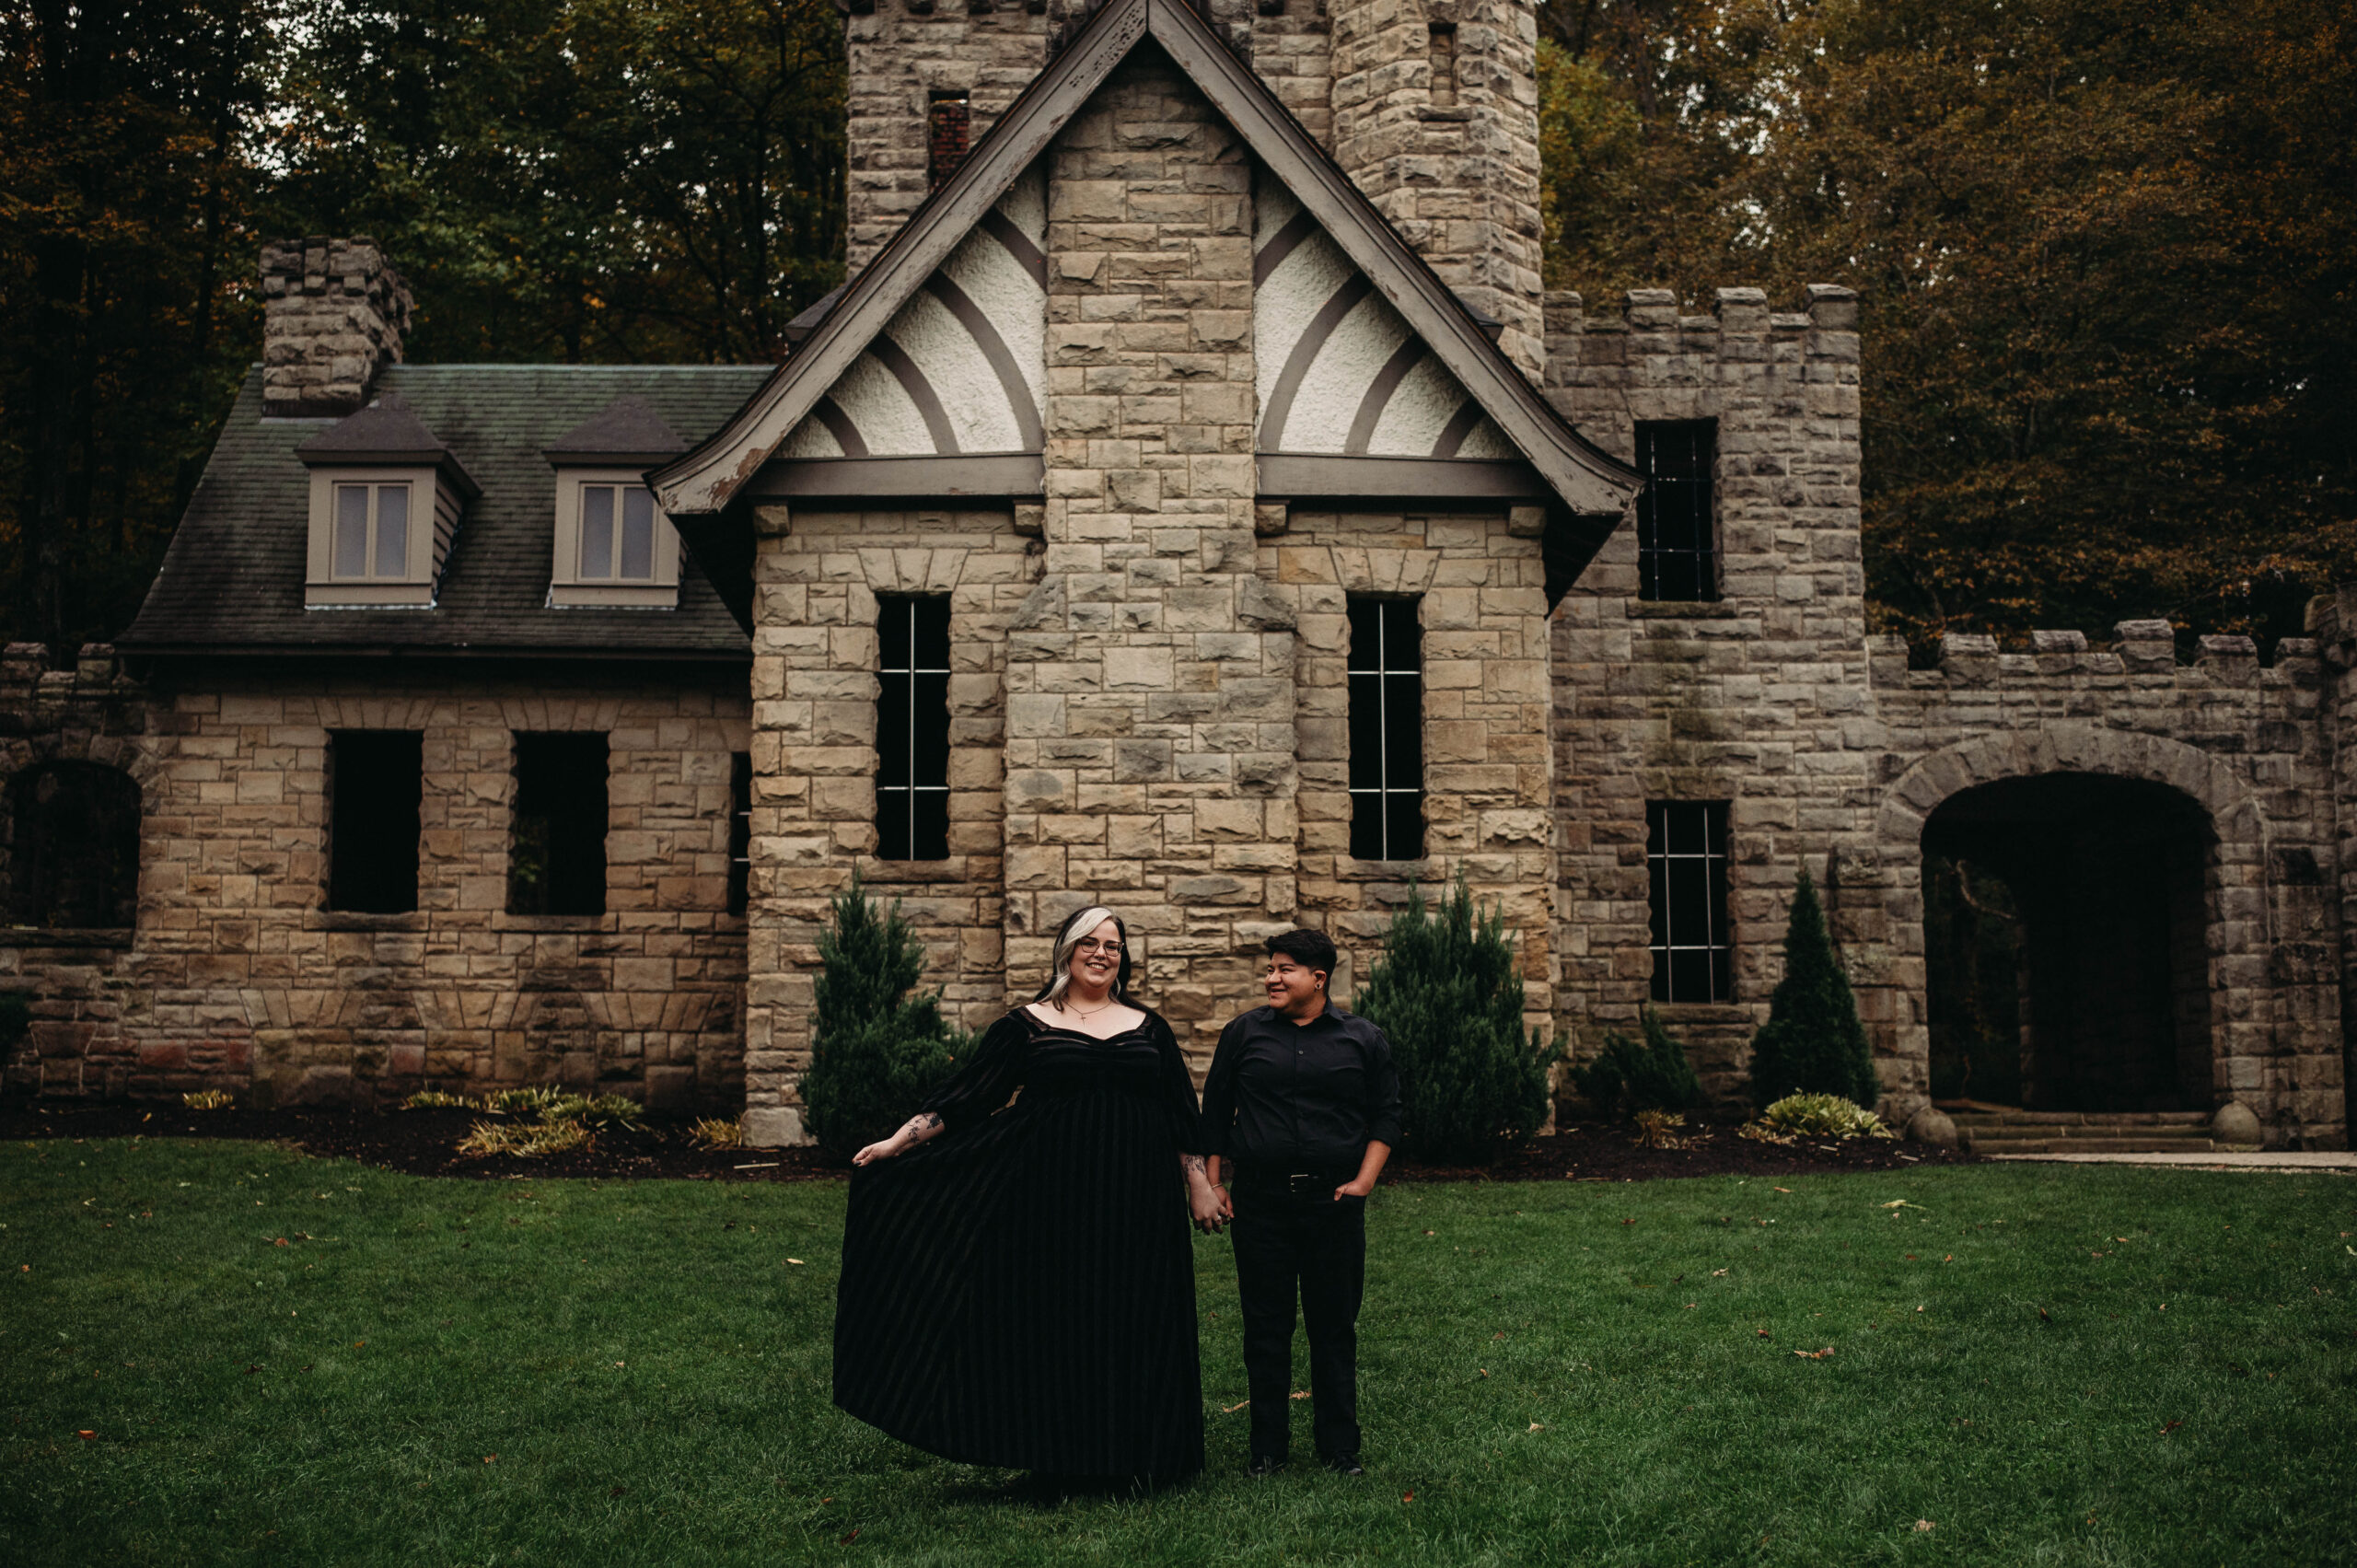 Gothic wedding venue in Ohio for Jolene and Casy.